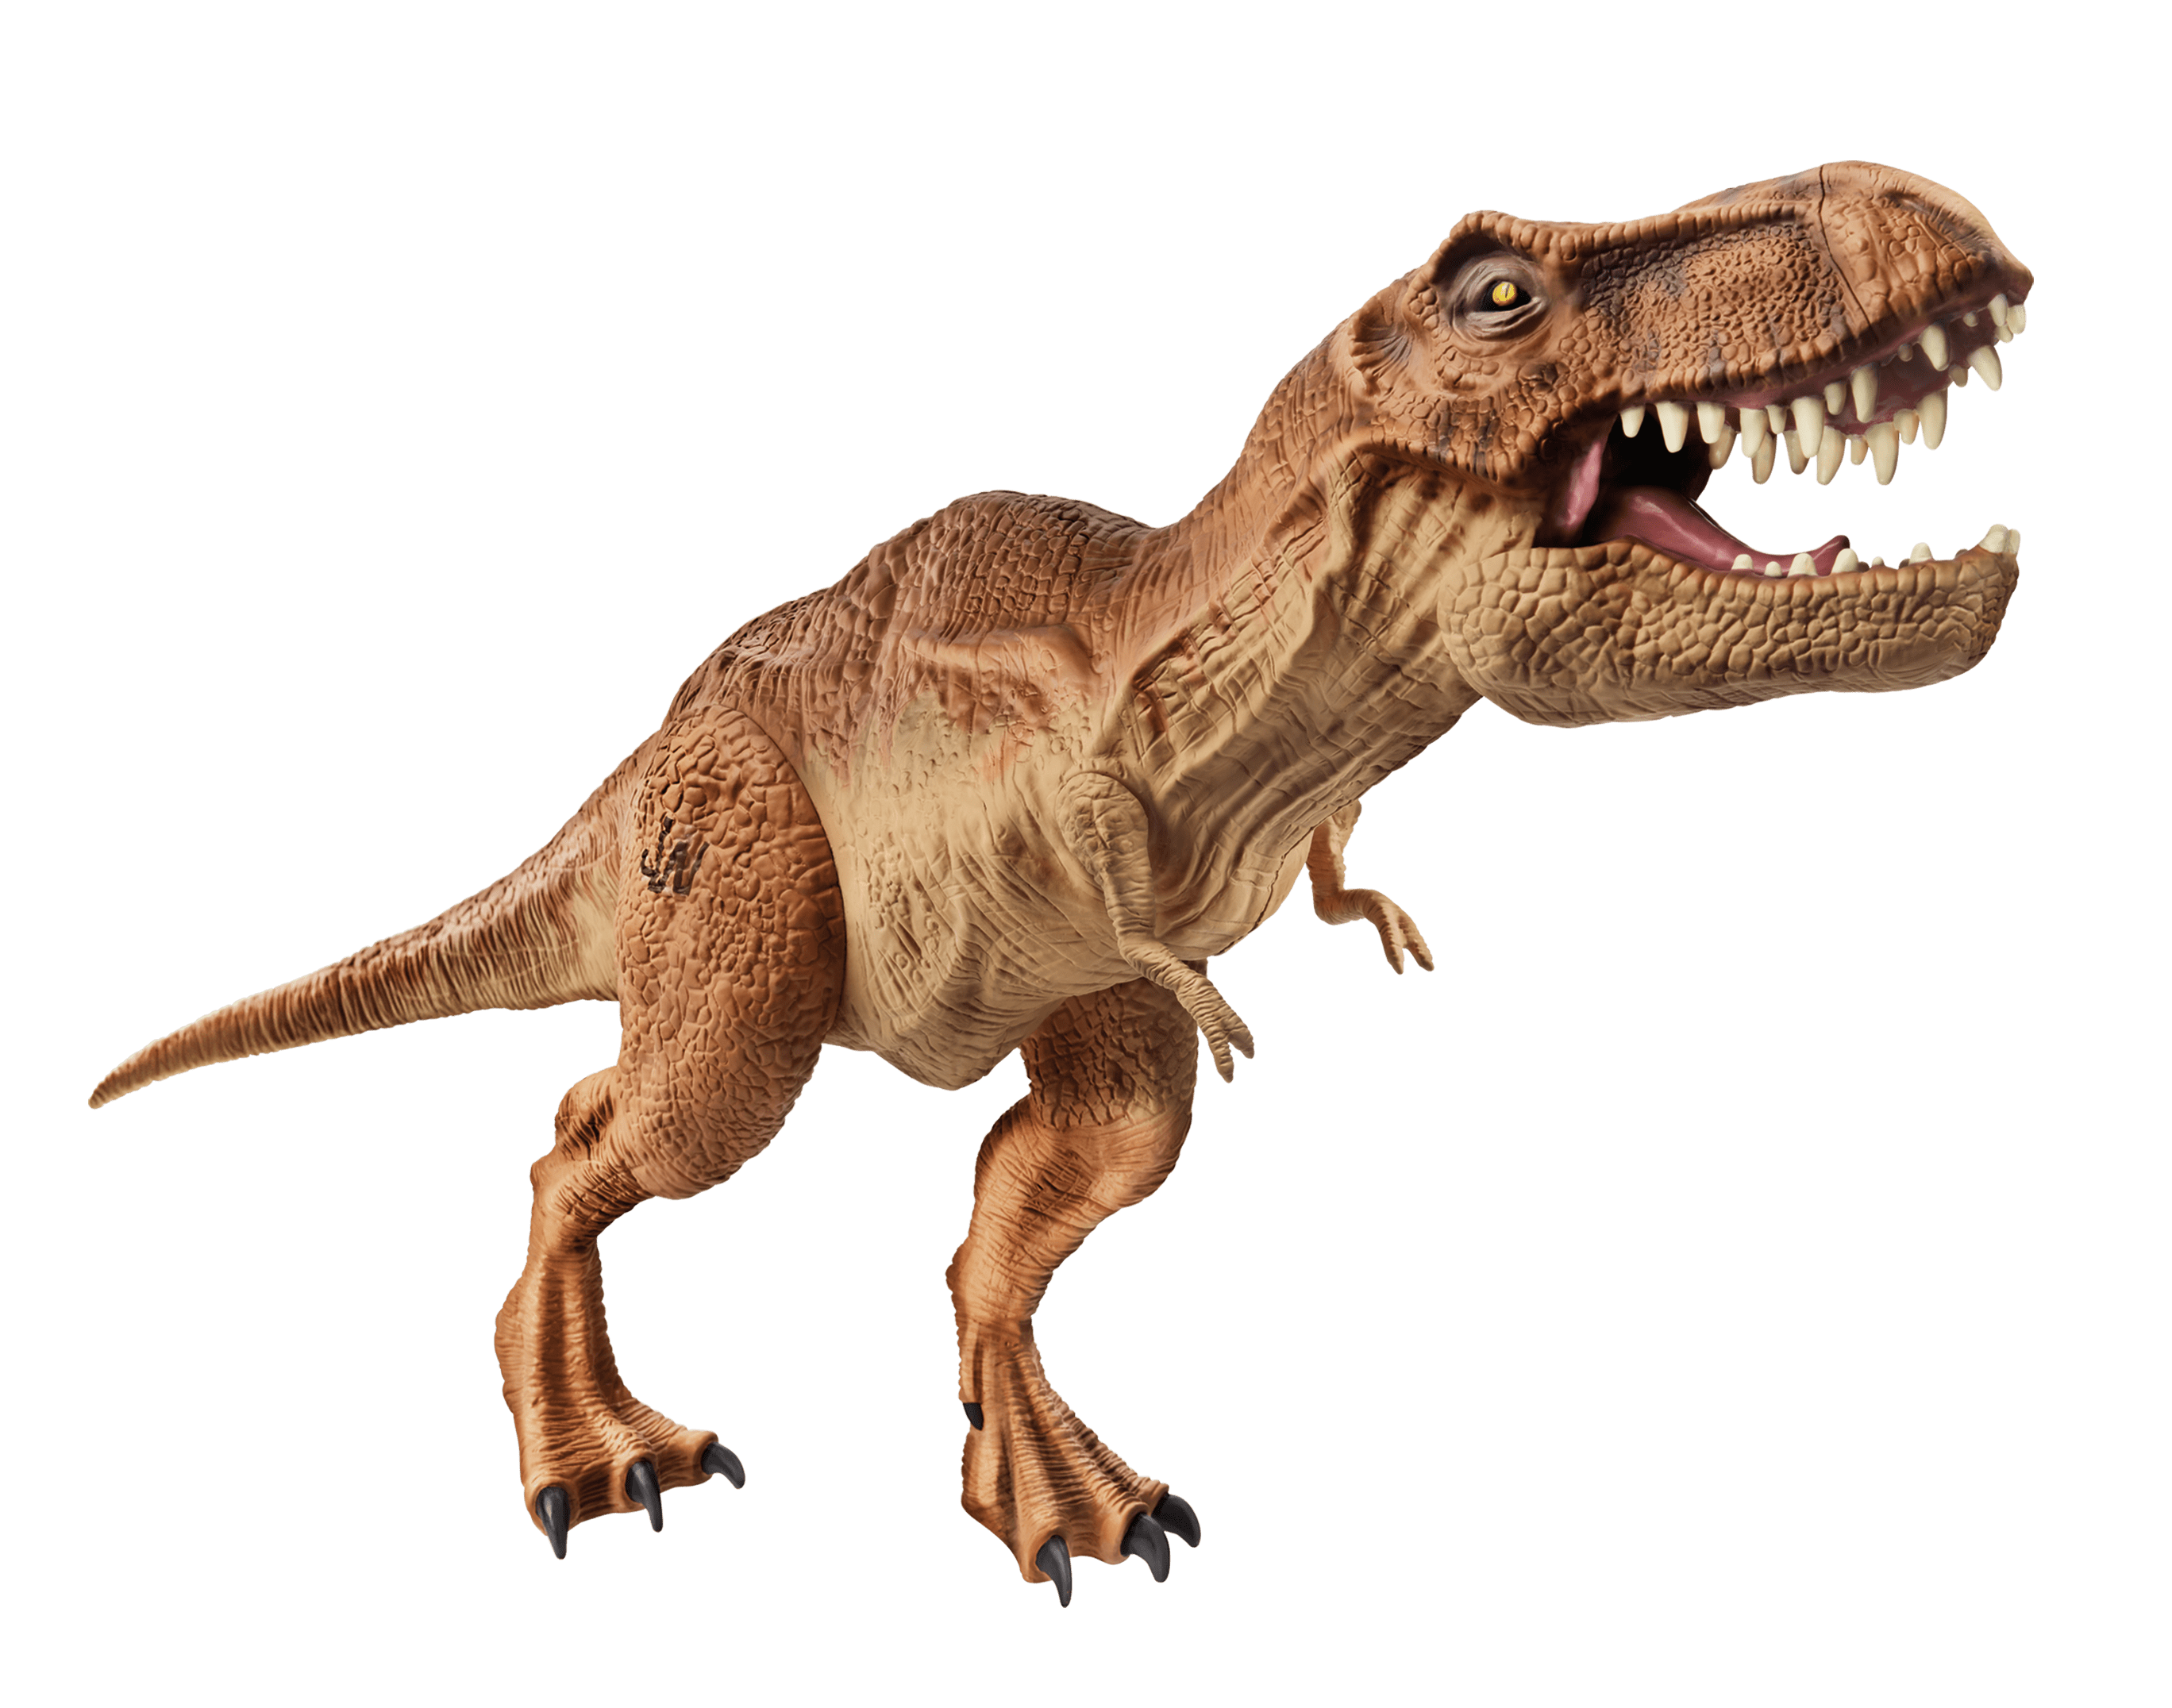 Jurassic t rex. Тираннозавр рекс мир Юрского периода. Мир Юрского периода Тиранозавр. Тирекс динозавр мир Юрского периода. Теранозавр рекс мир Юрского периода.